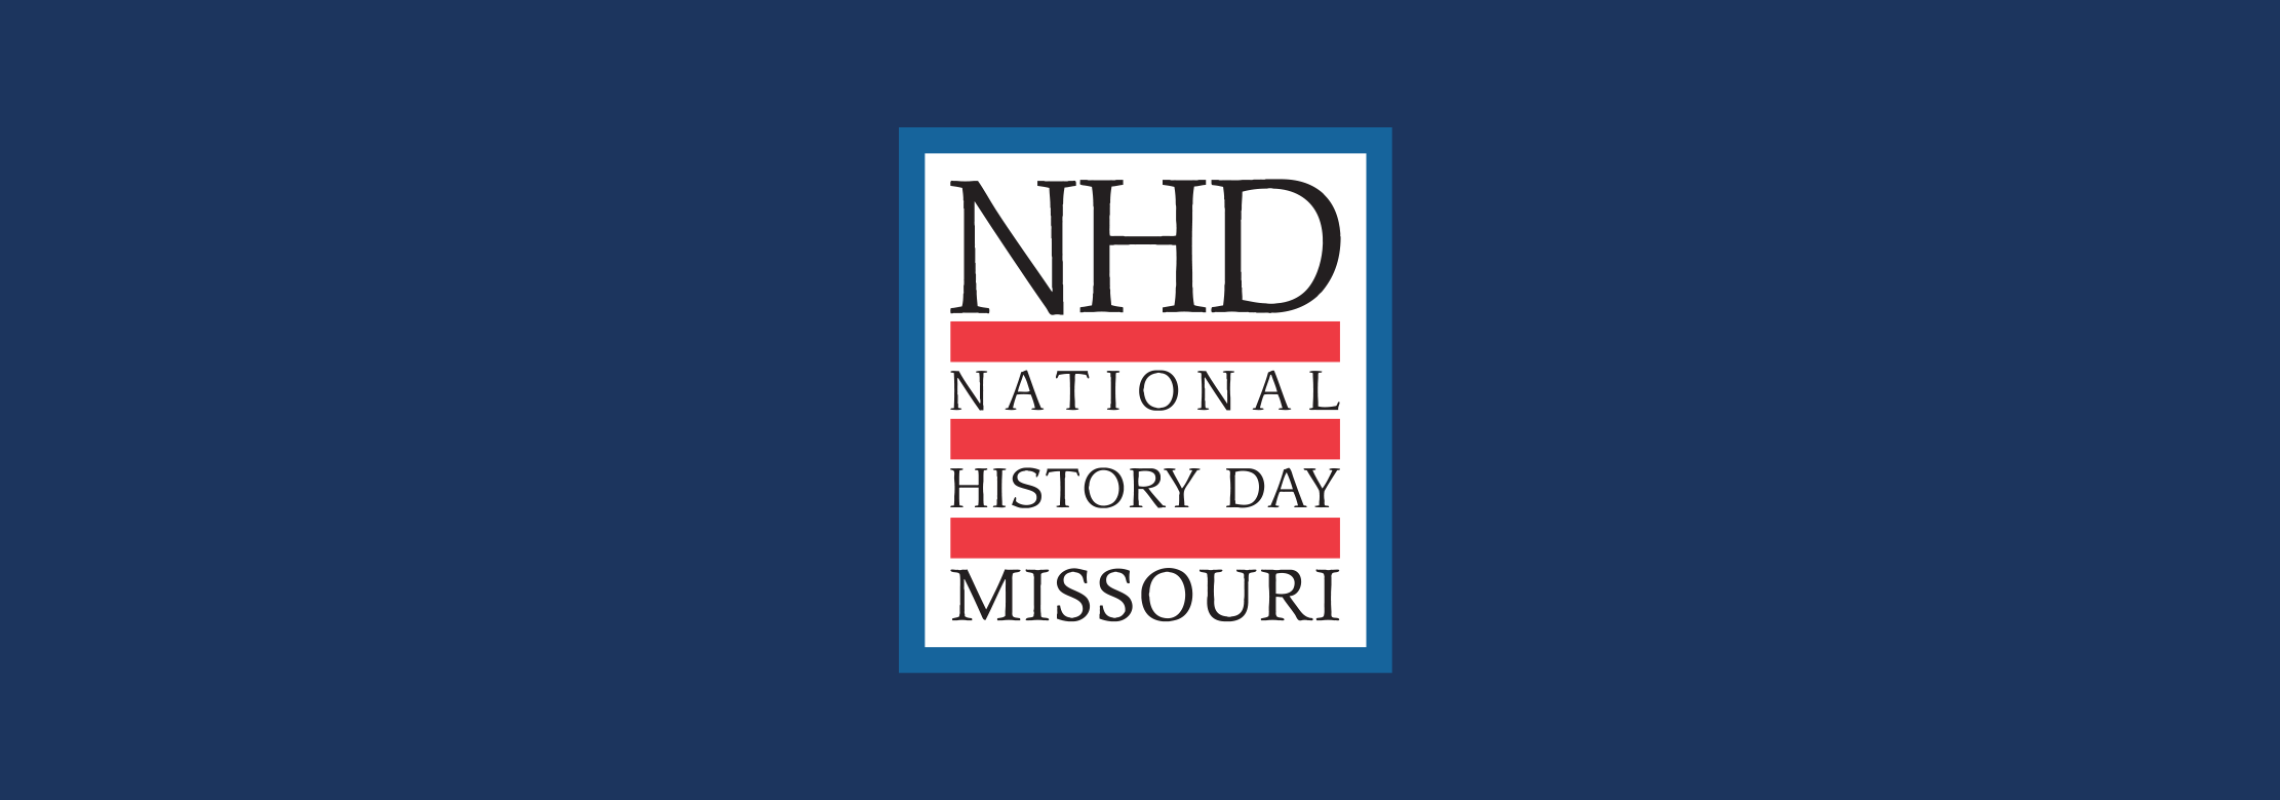 NHDMO logo